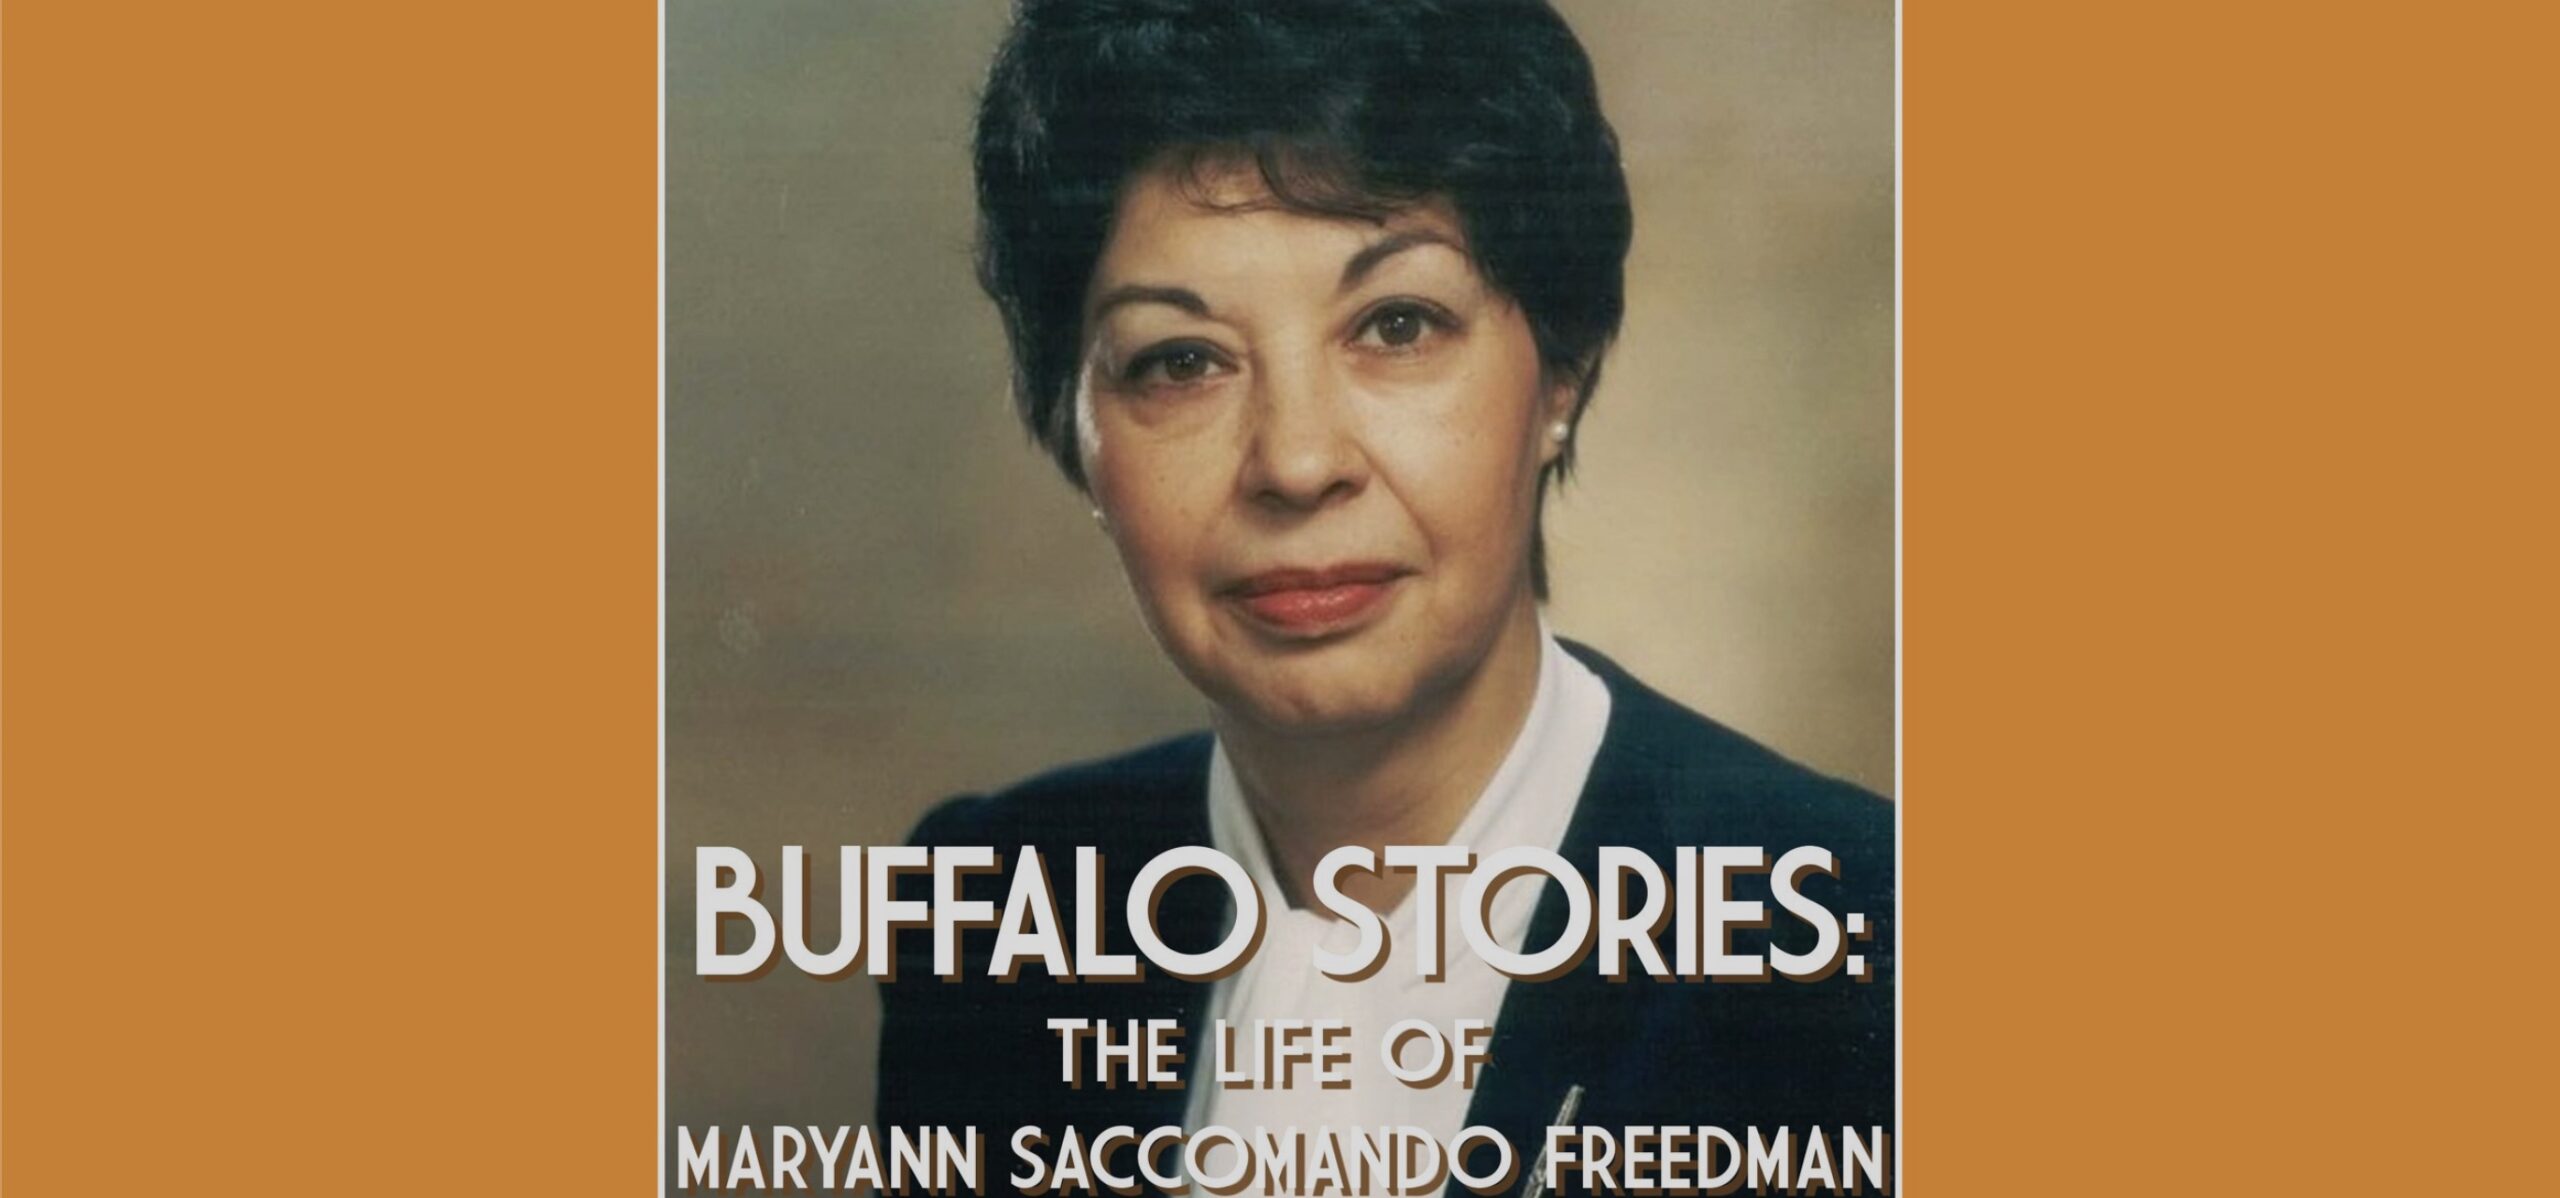 Buffalo Stories: The Life of Maryann Saccomando Freedman